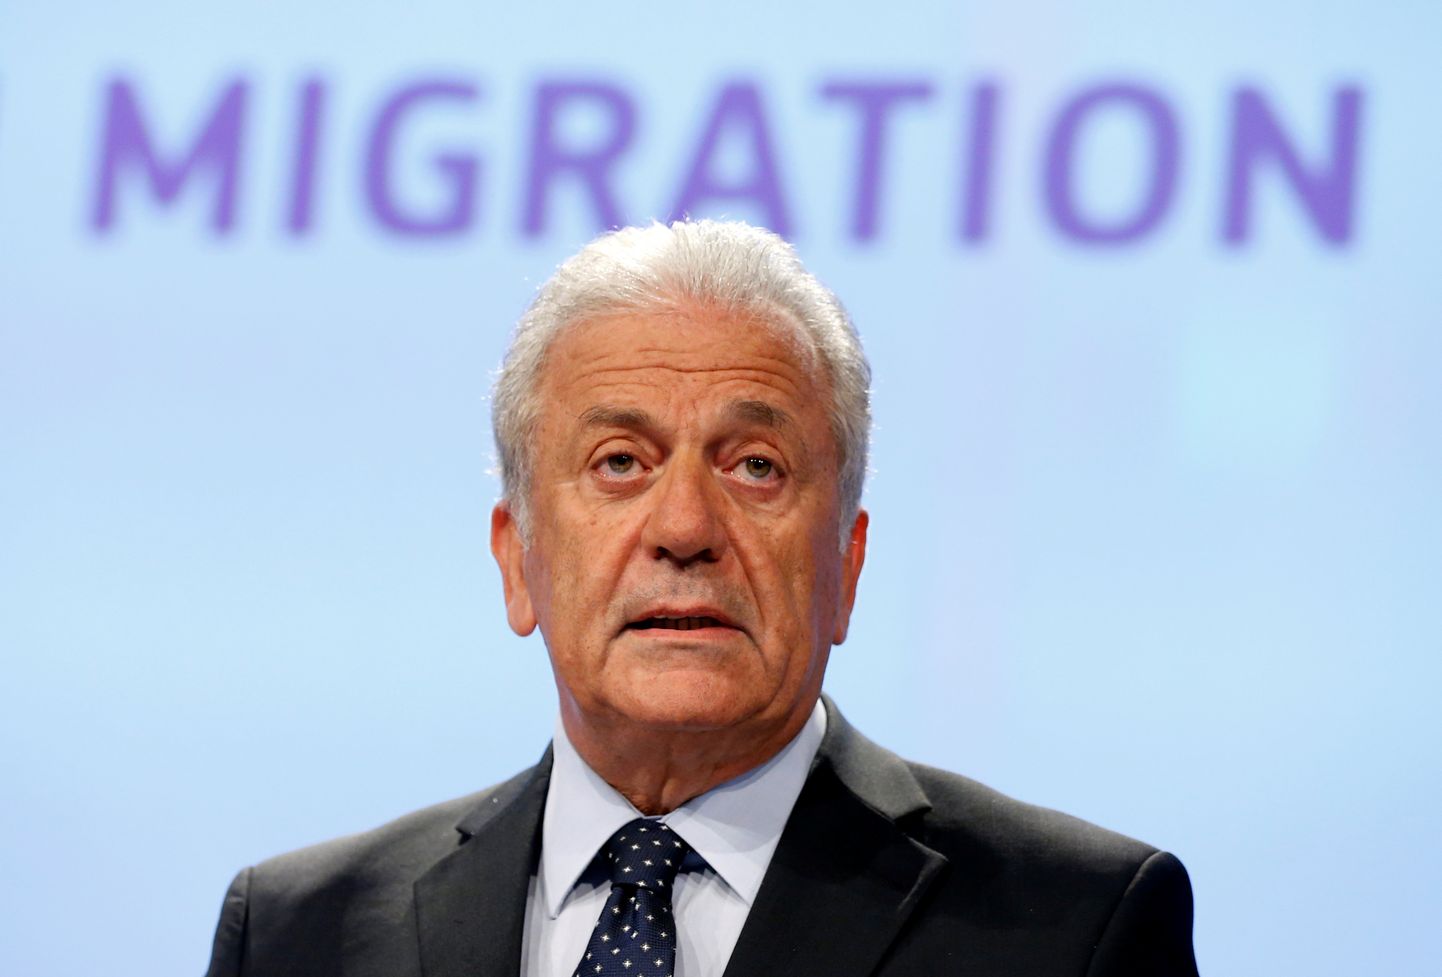 EL-i migratsioonivolinik Dimitris Avramopoulos.